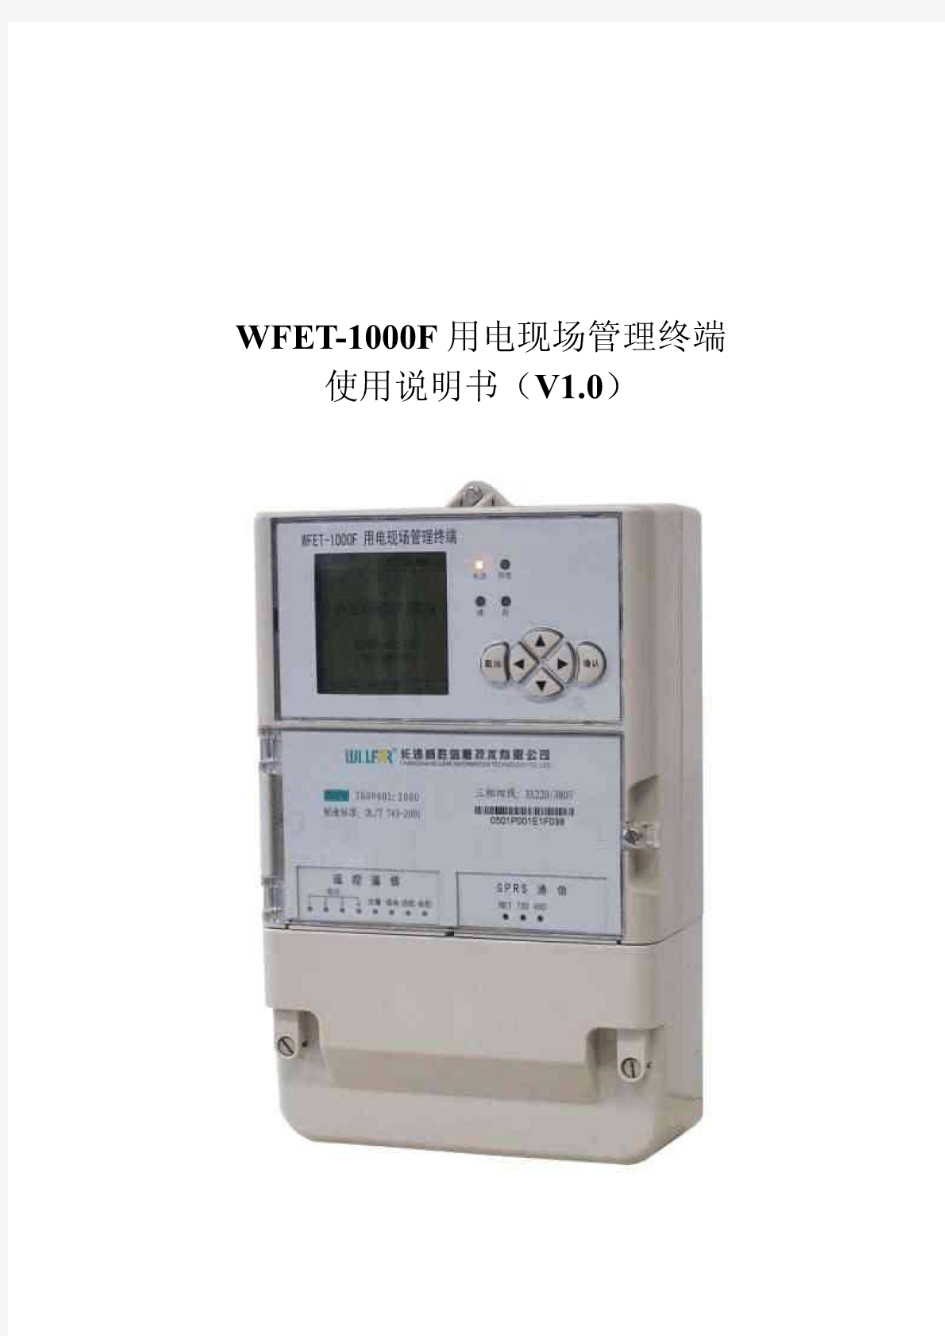 WFET-1000F用电现场管理终端使用说明书(V10)(2005-03-08归档版)